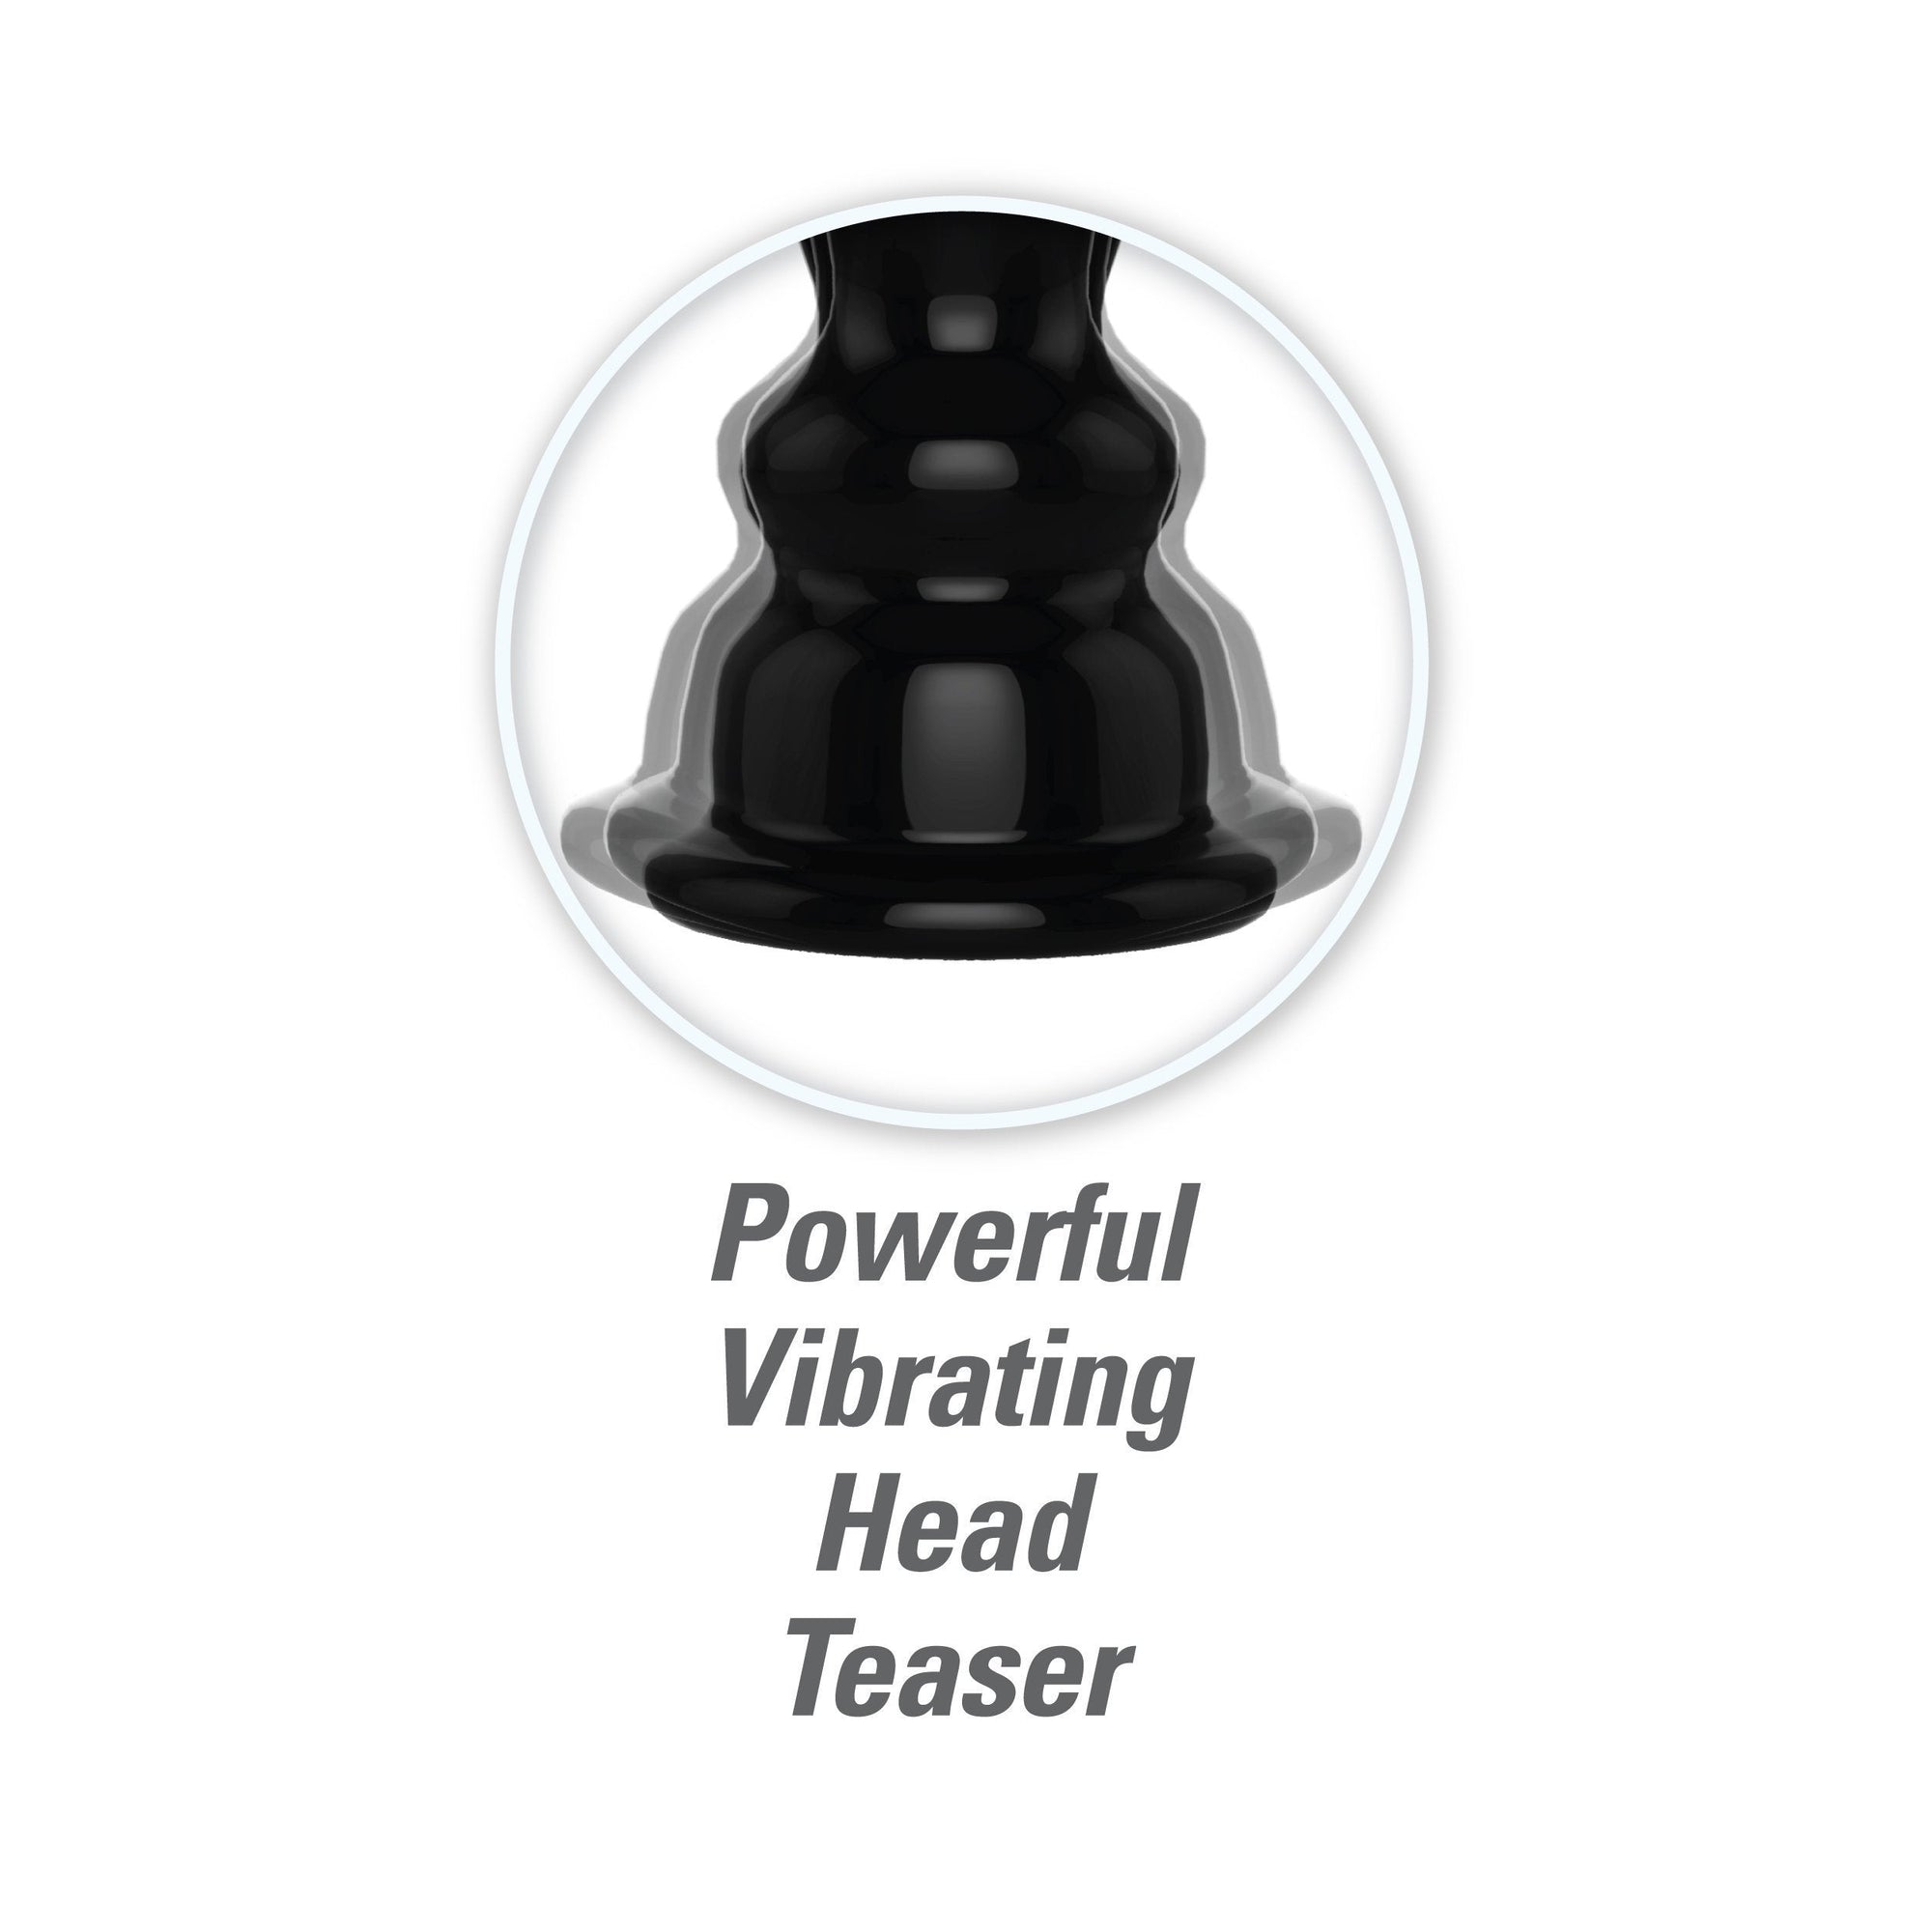 Pipedream - Pump Worx Vibrating Head Trainer -  Masturbator Soft Stroker (Vibration) Non Rechargeable  Durio.sg